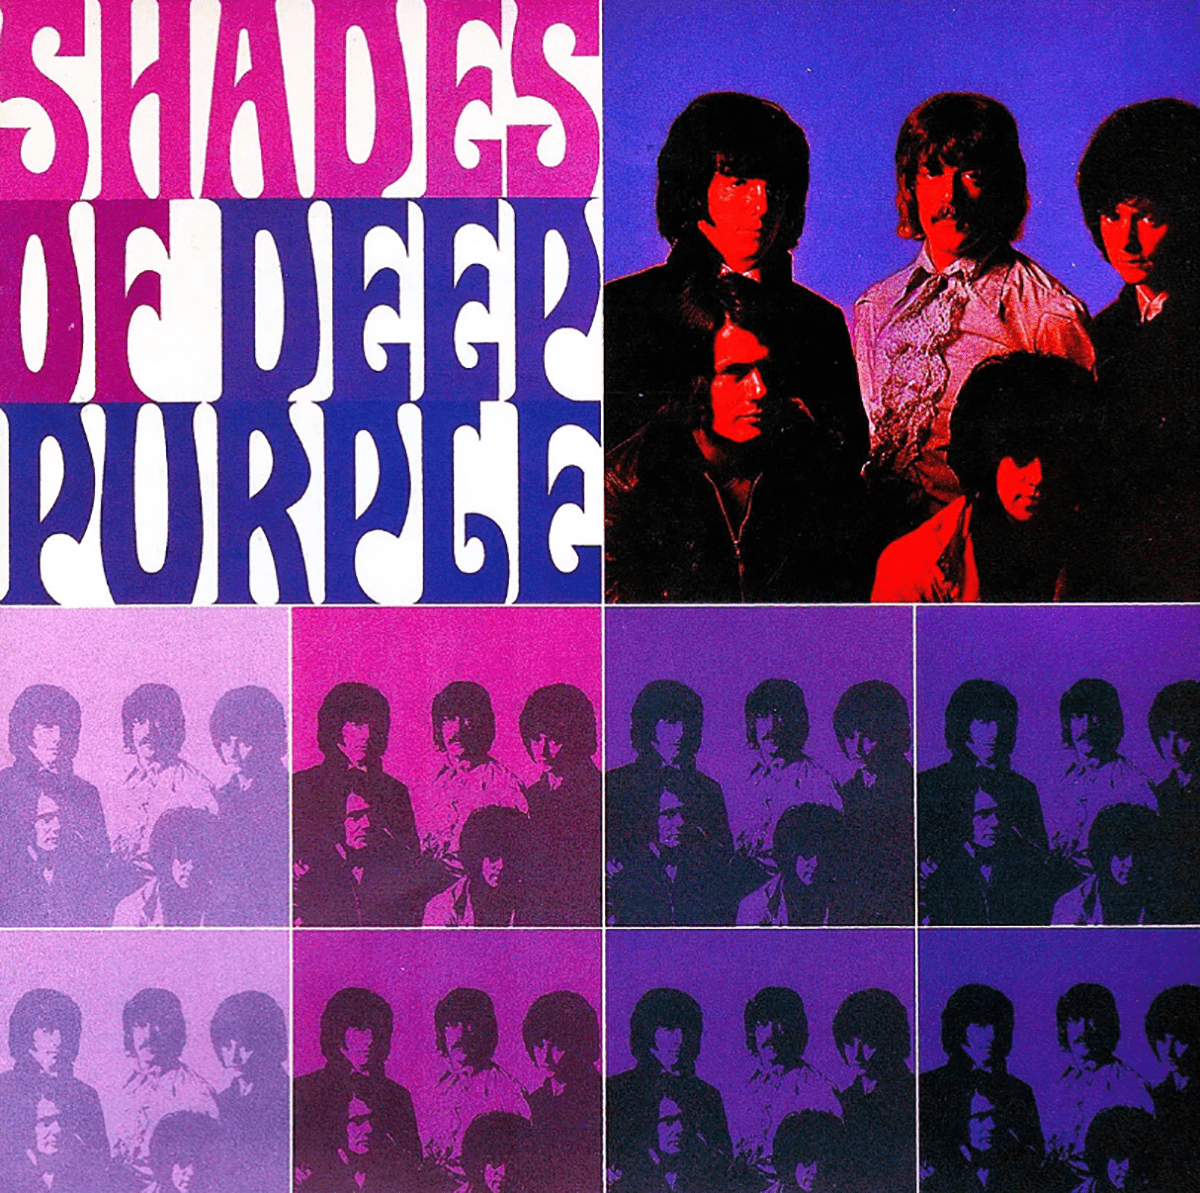 Cover of the studio album "Shades of Deep Purple", 1968